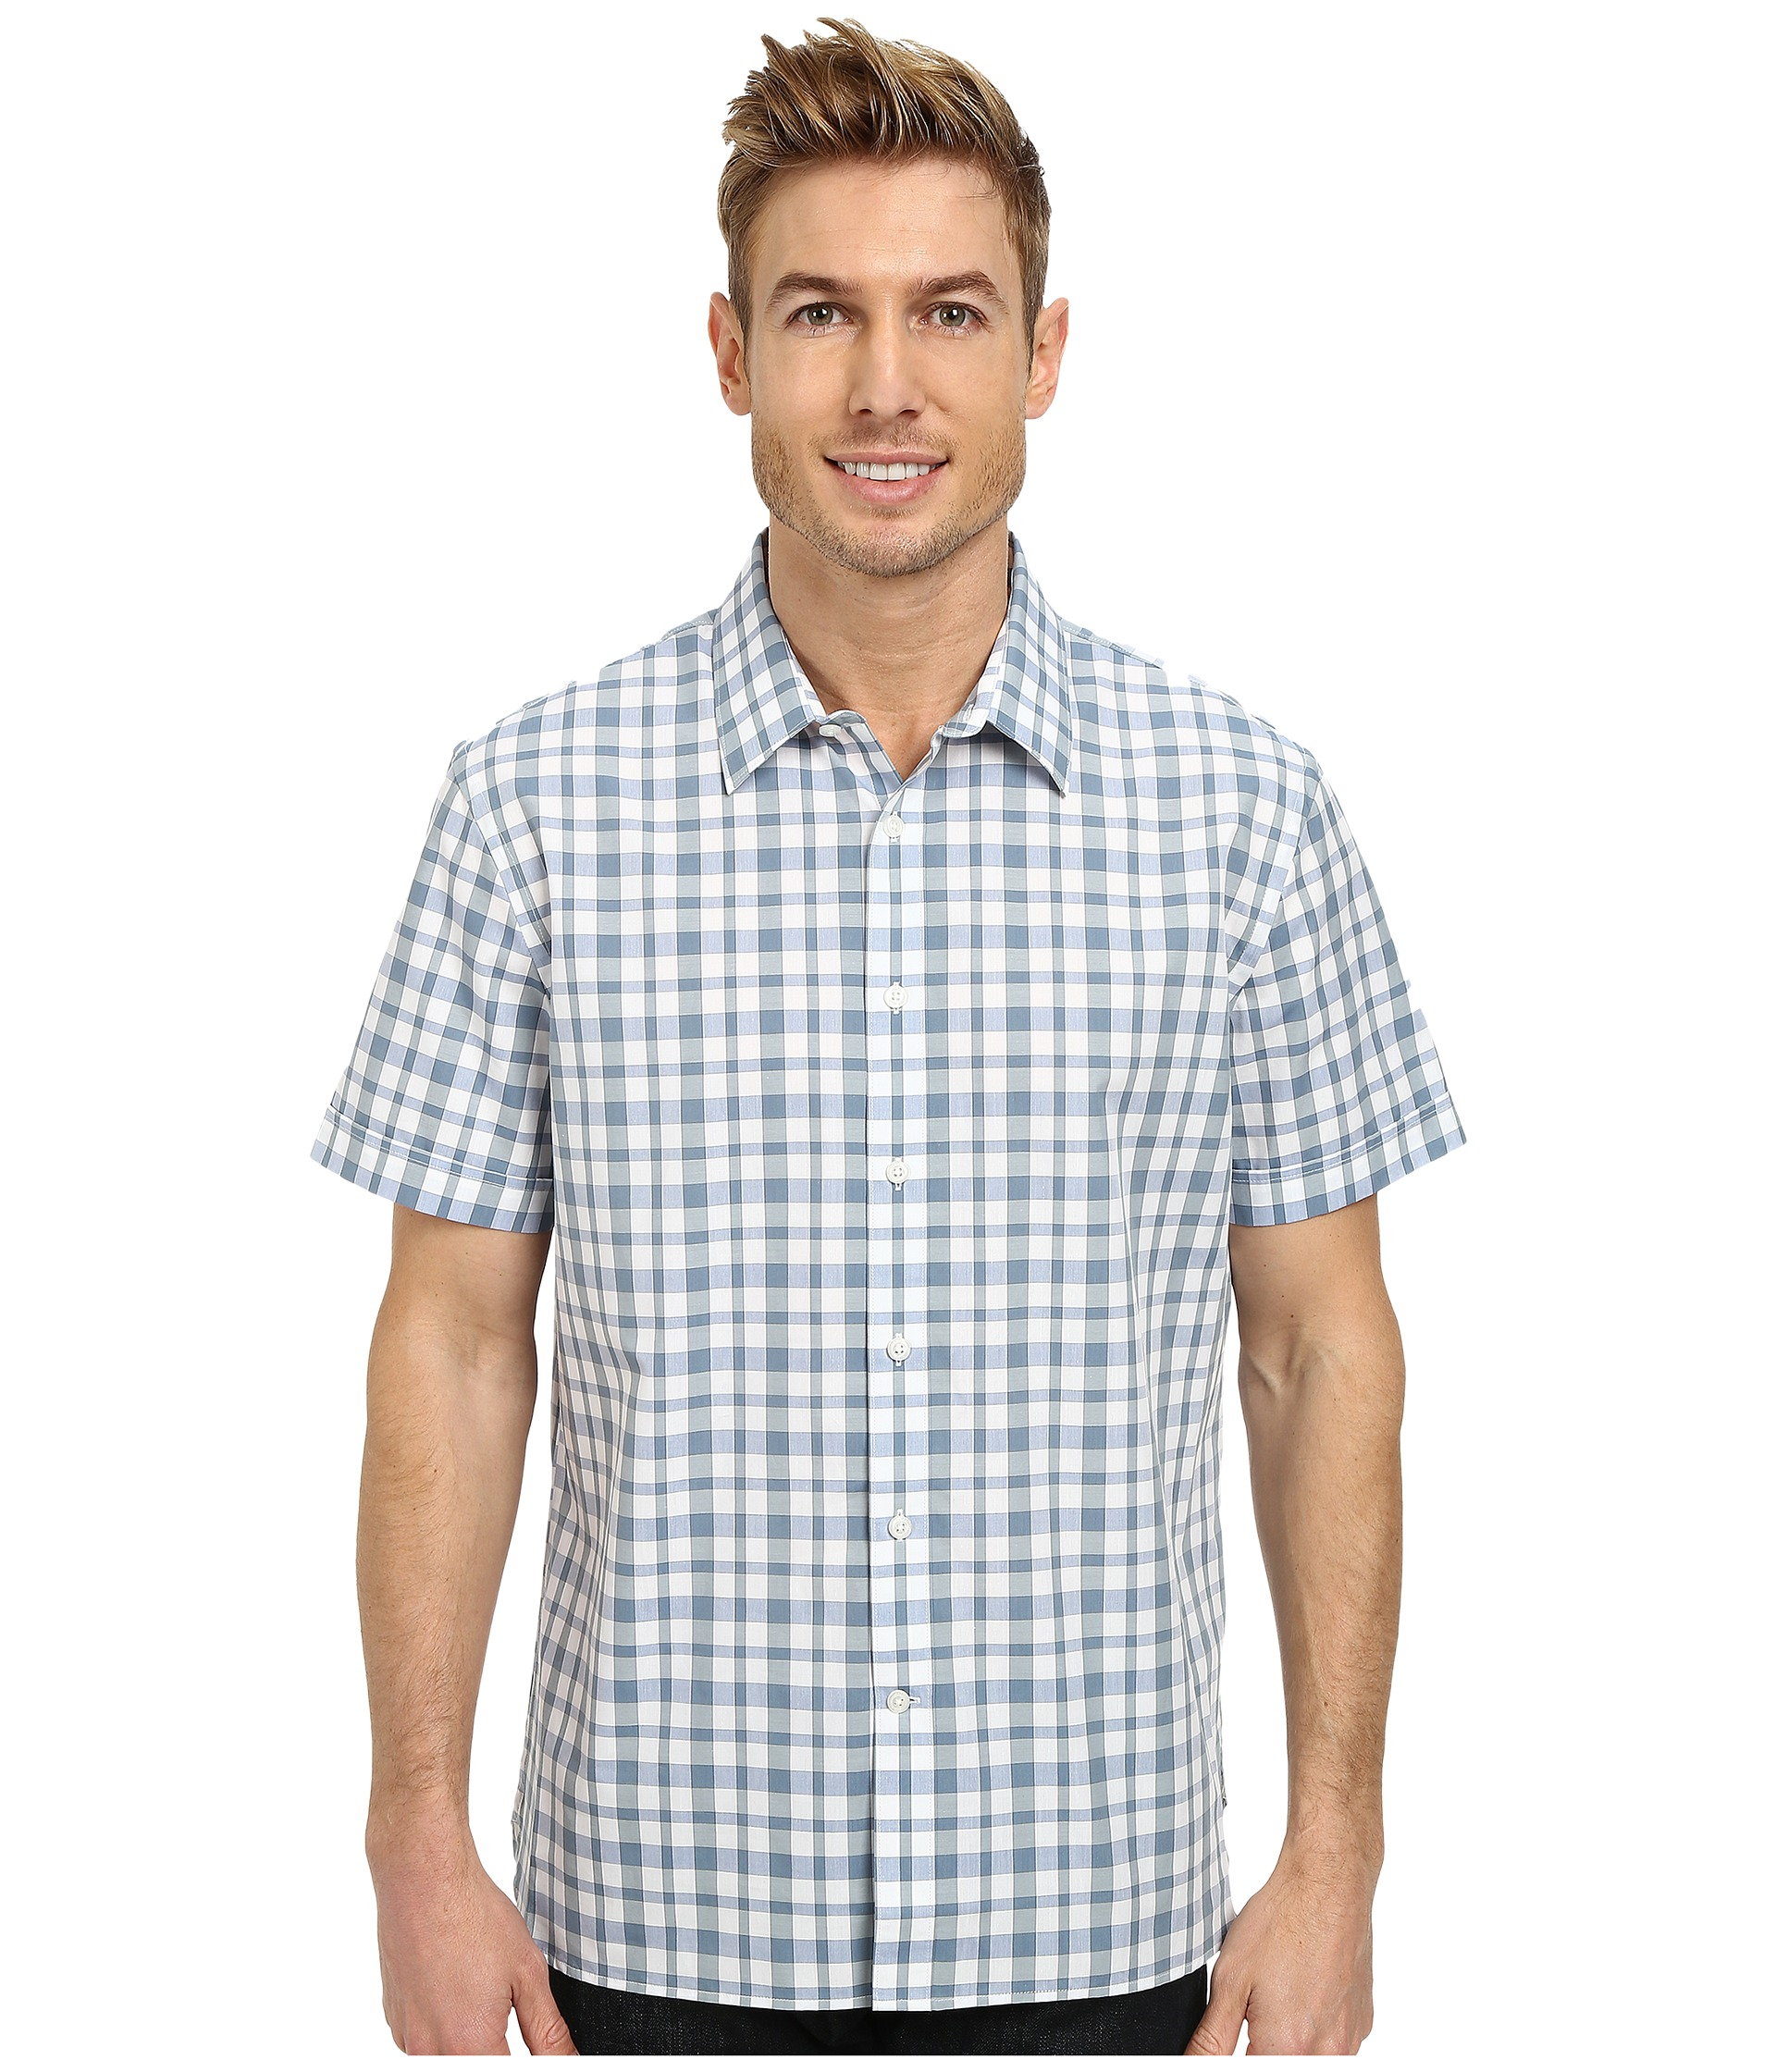 Perry Ellis Short Sleeve Plaid Pattern Shirt in Blue for Men - Lyst